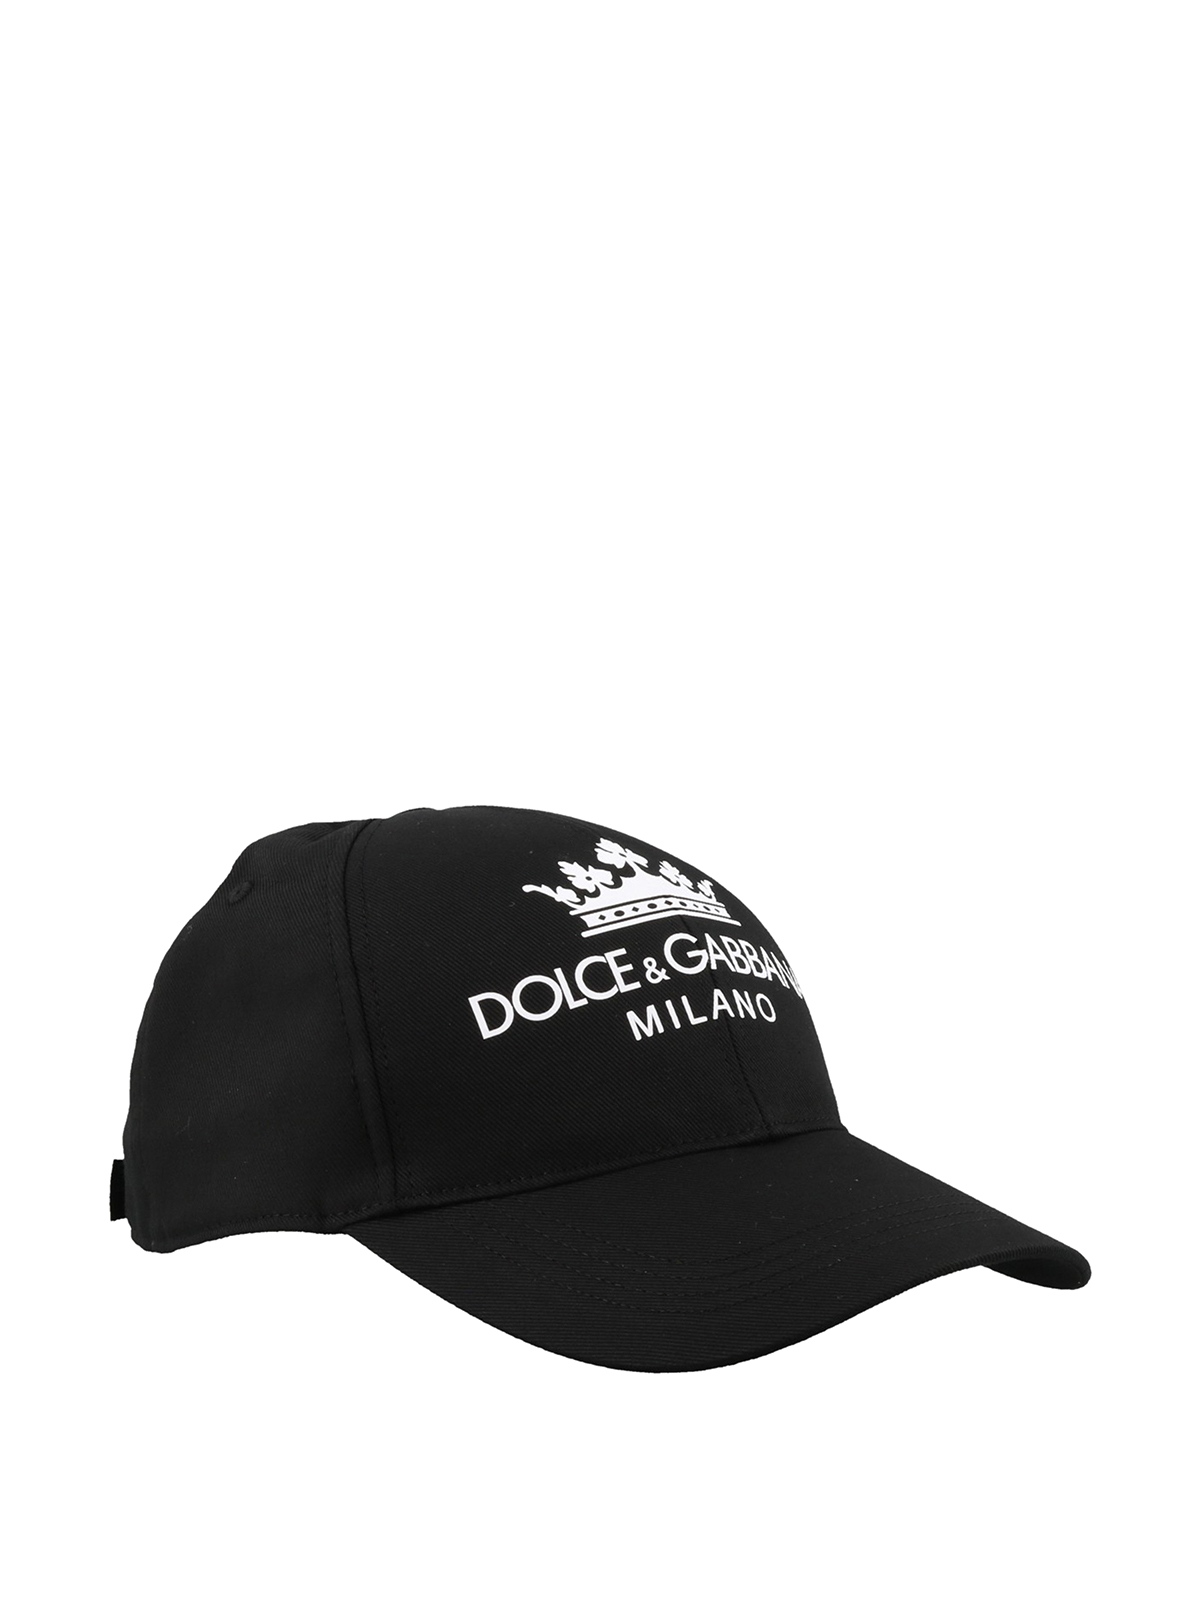 Hats & caps Dolce & Gabbana - Logo print black baseball cap ...